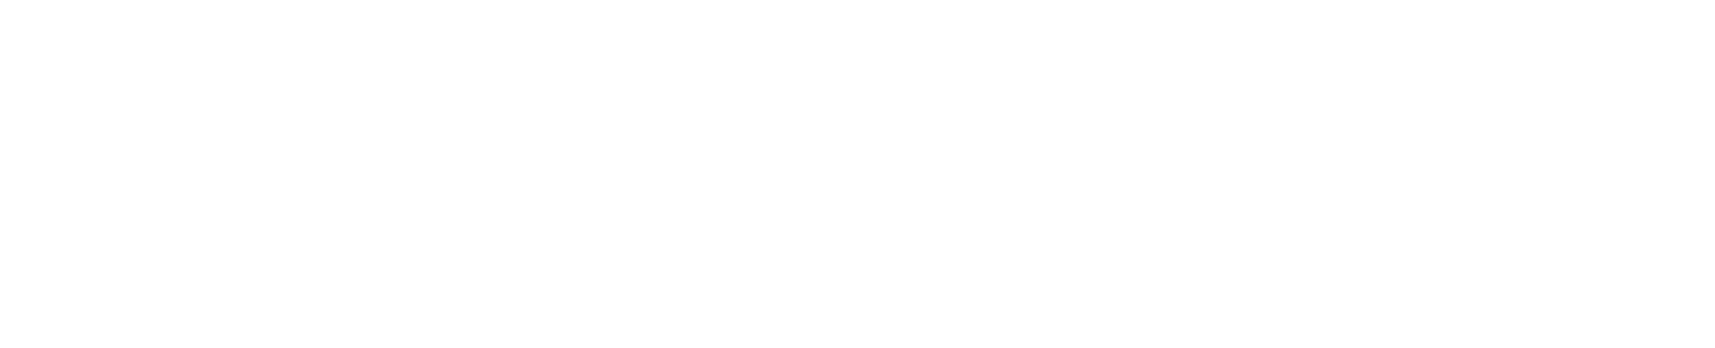 ClickFood Logo Ani